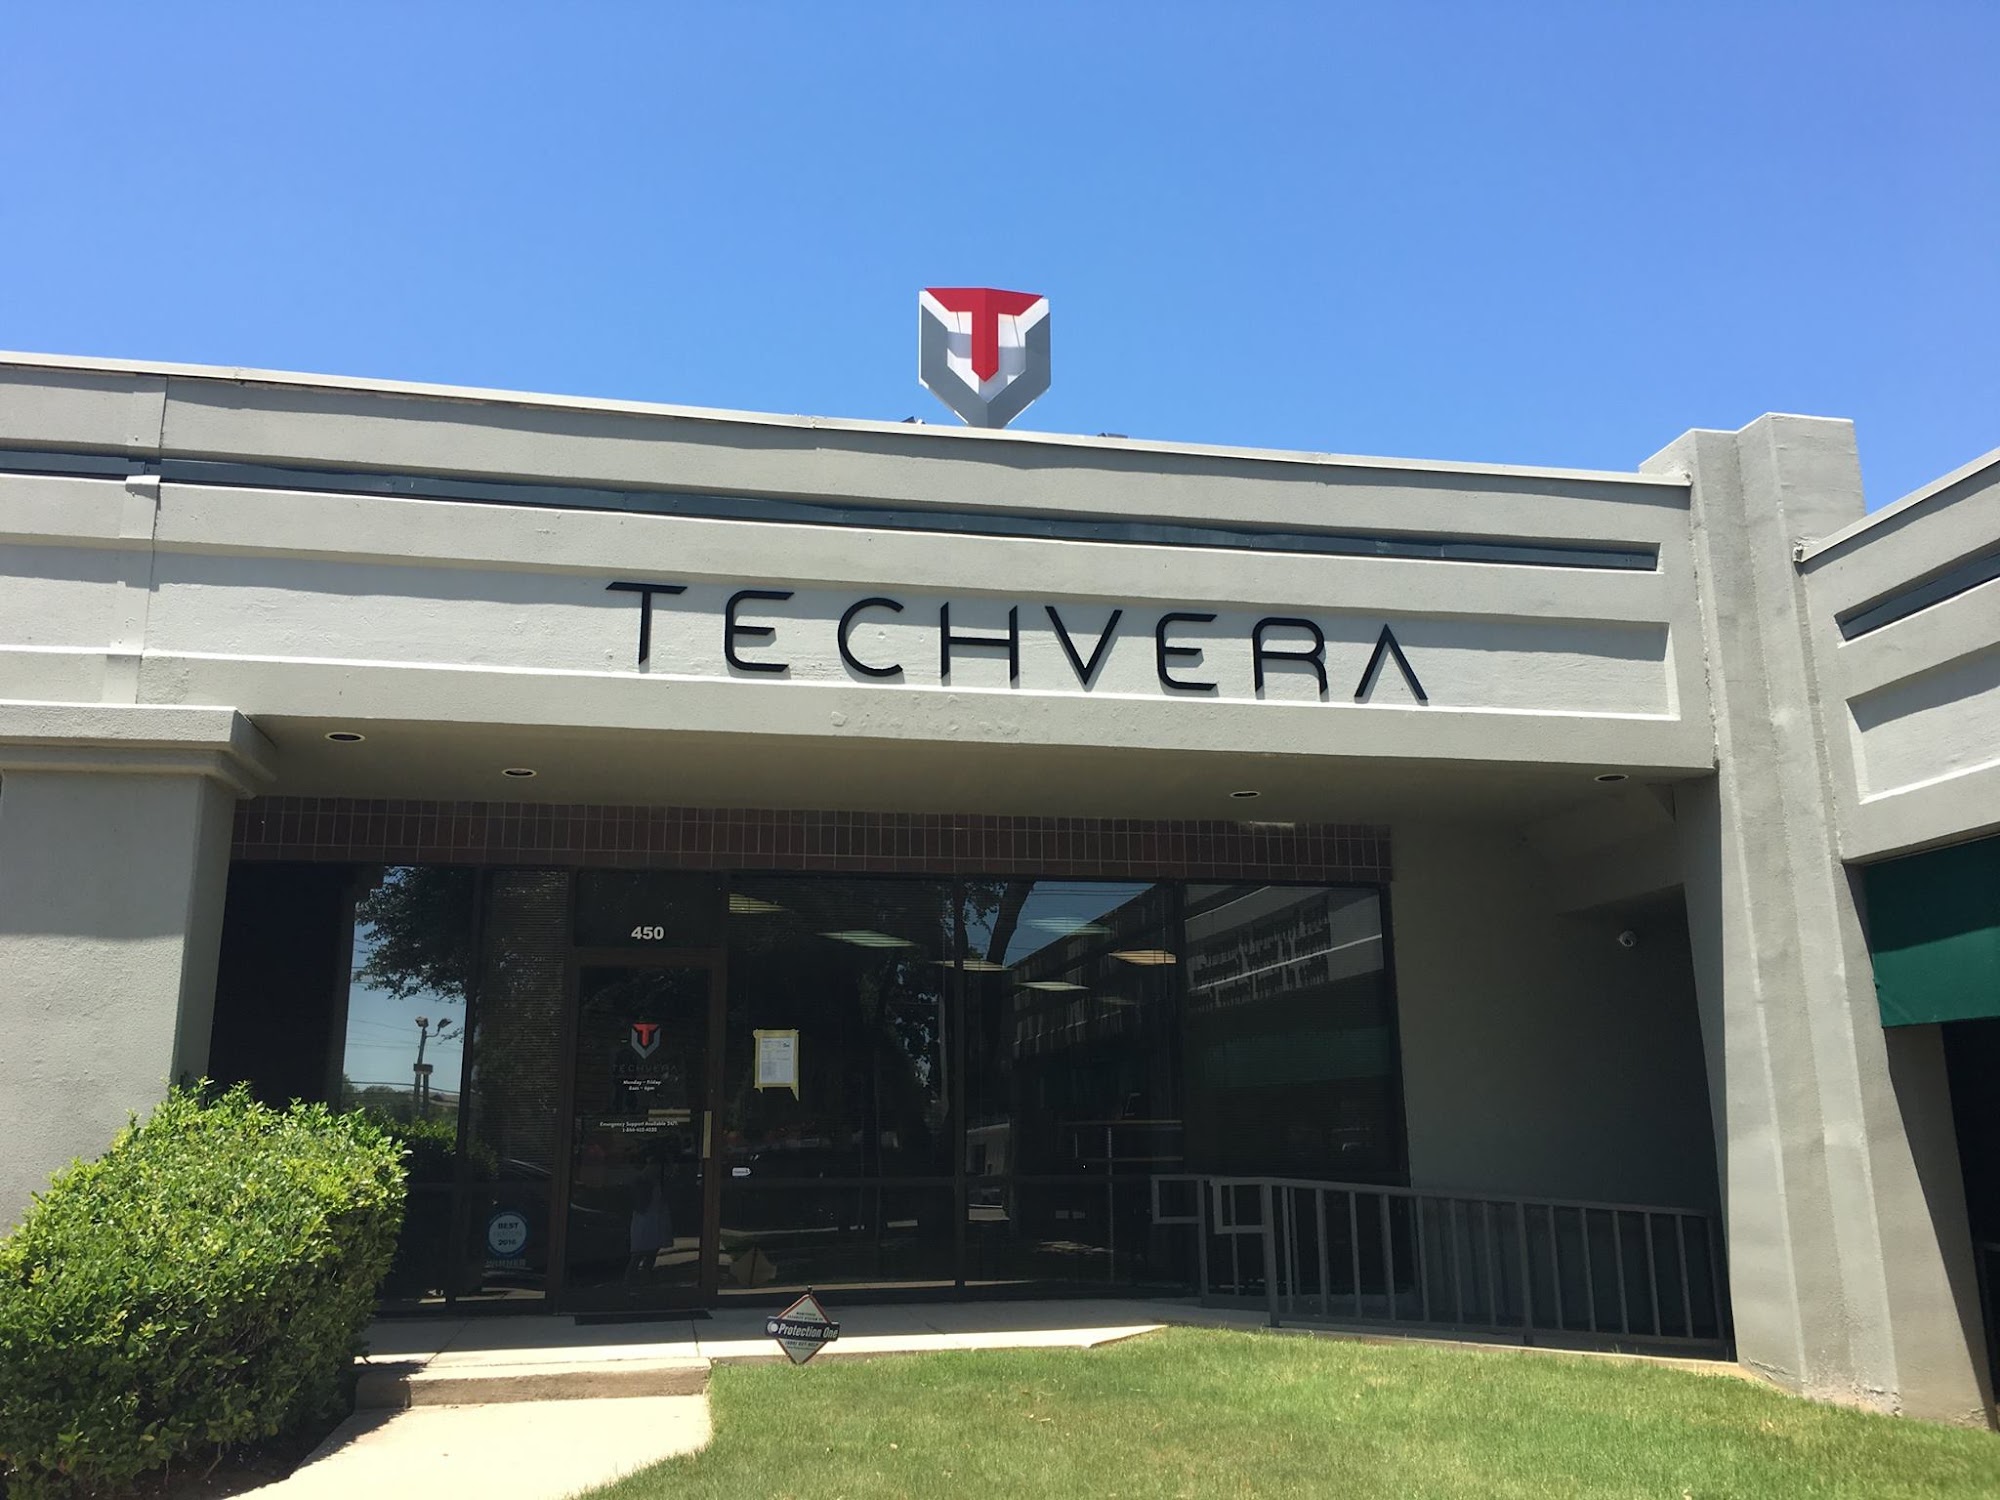 Techvera, an Electric company